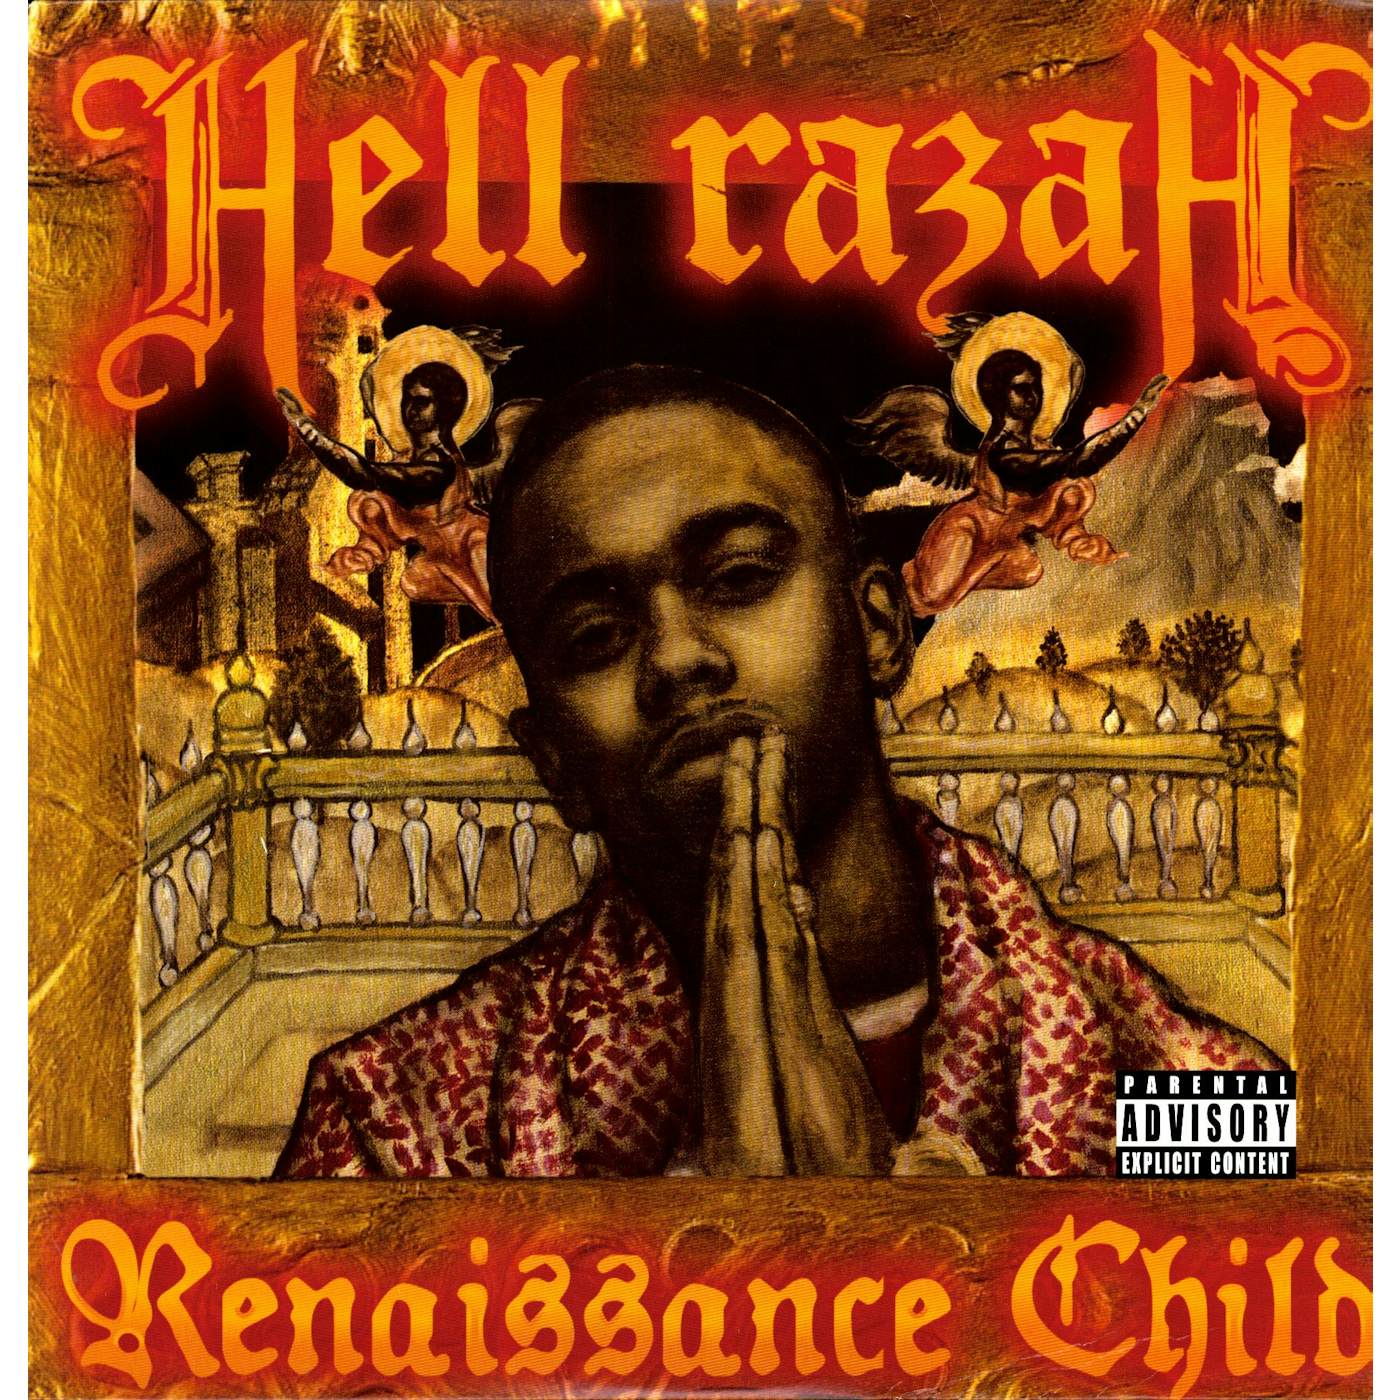 Hell Razah Renaissance Child Vinyl Record